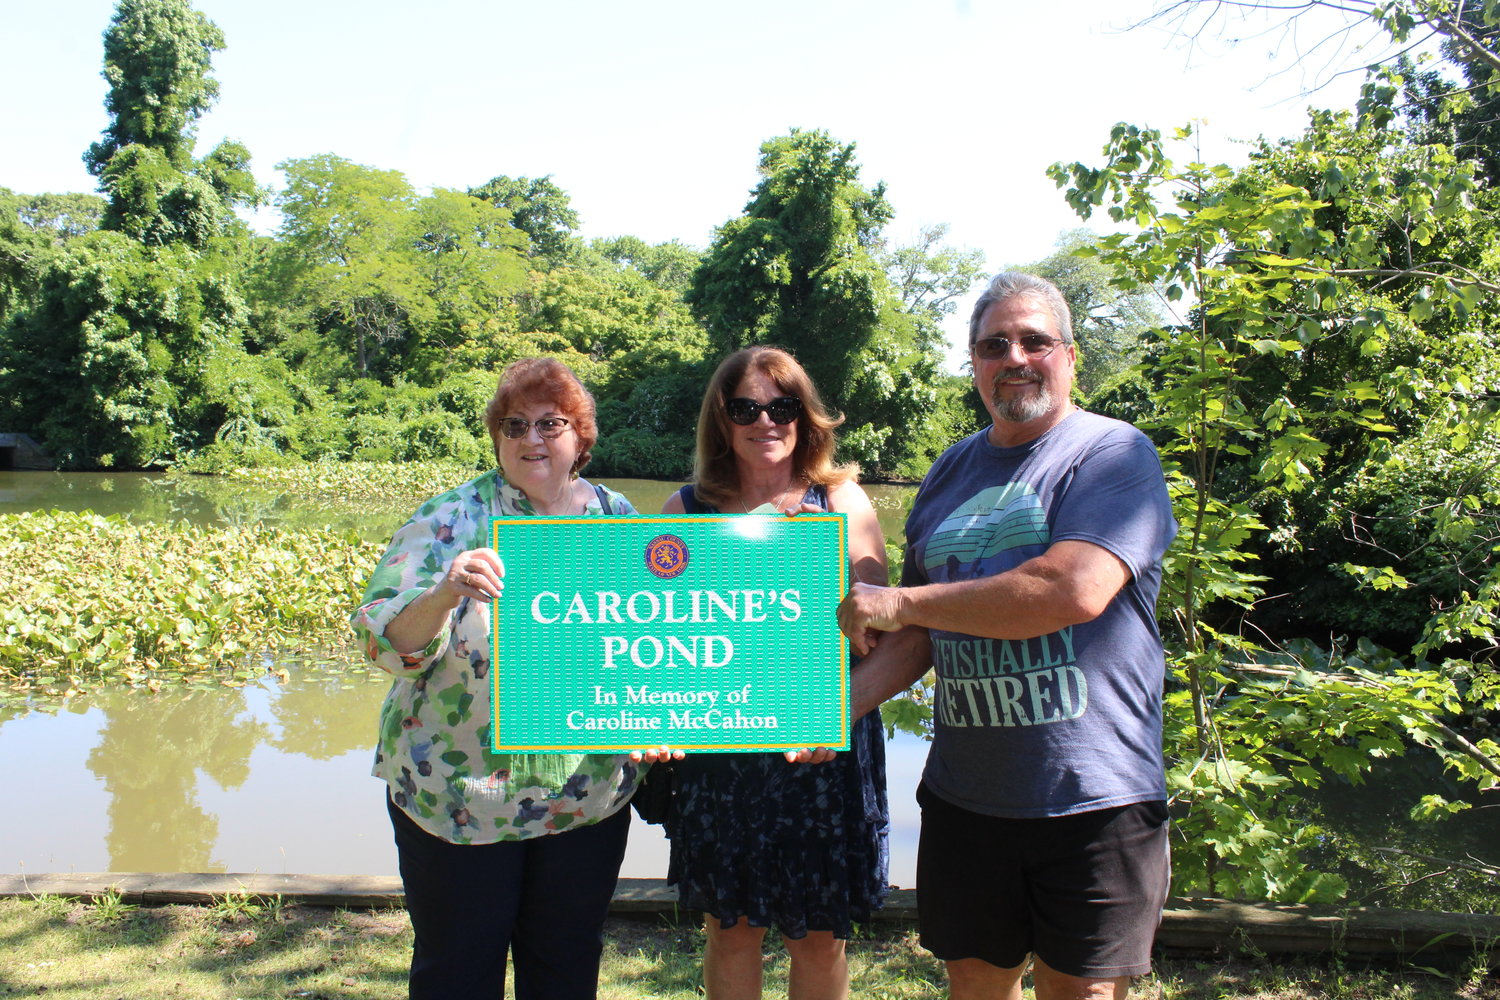 Caroline McCahon’s family — Ellen Plossl, Julie Slotkin and Daniel McCahon — with the miniature Caroline’s Pond marker that was presented to them.